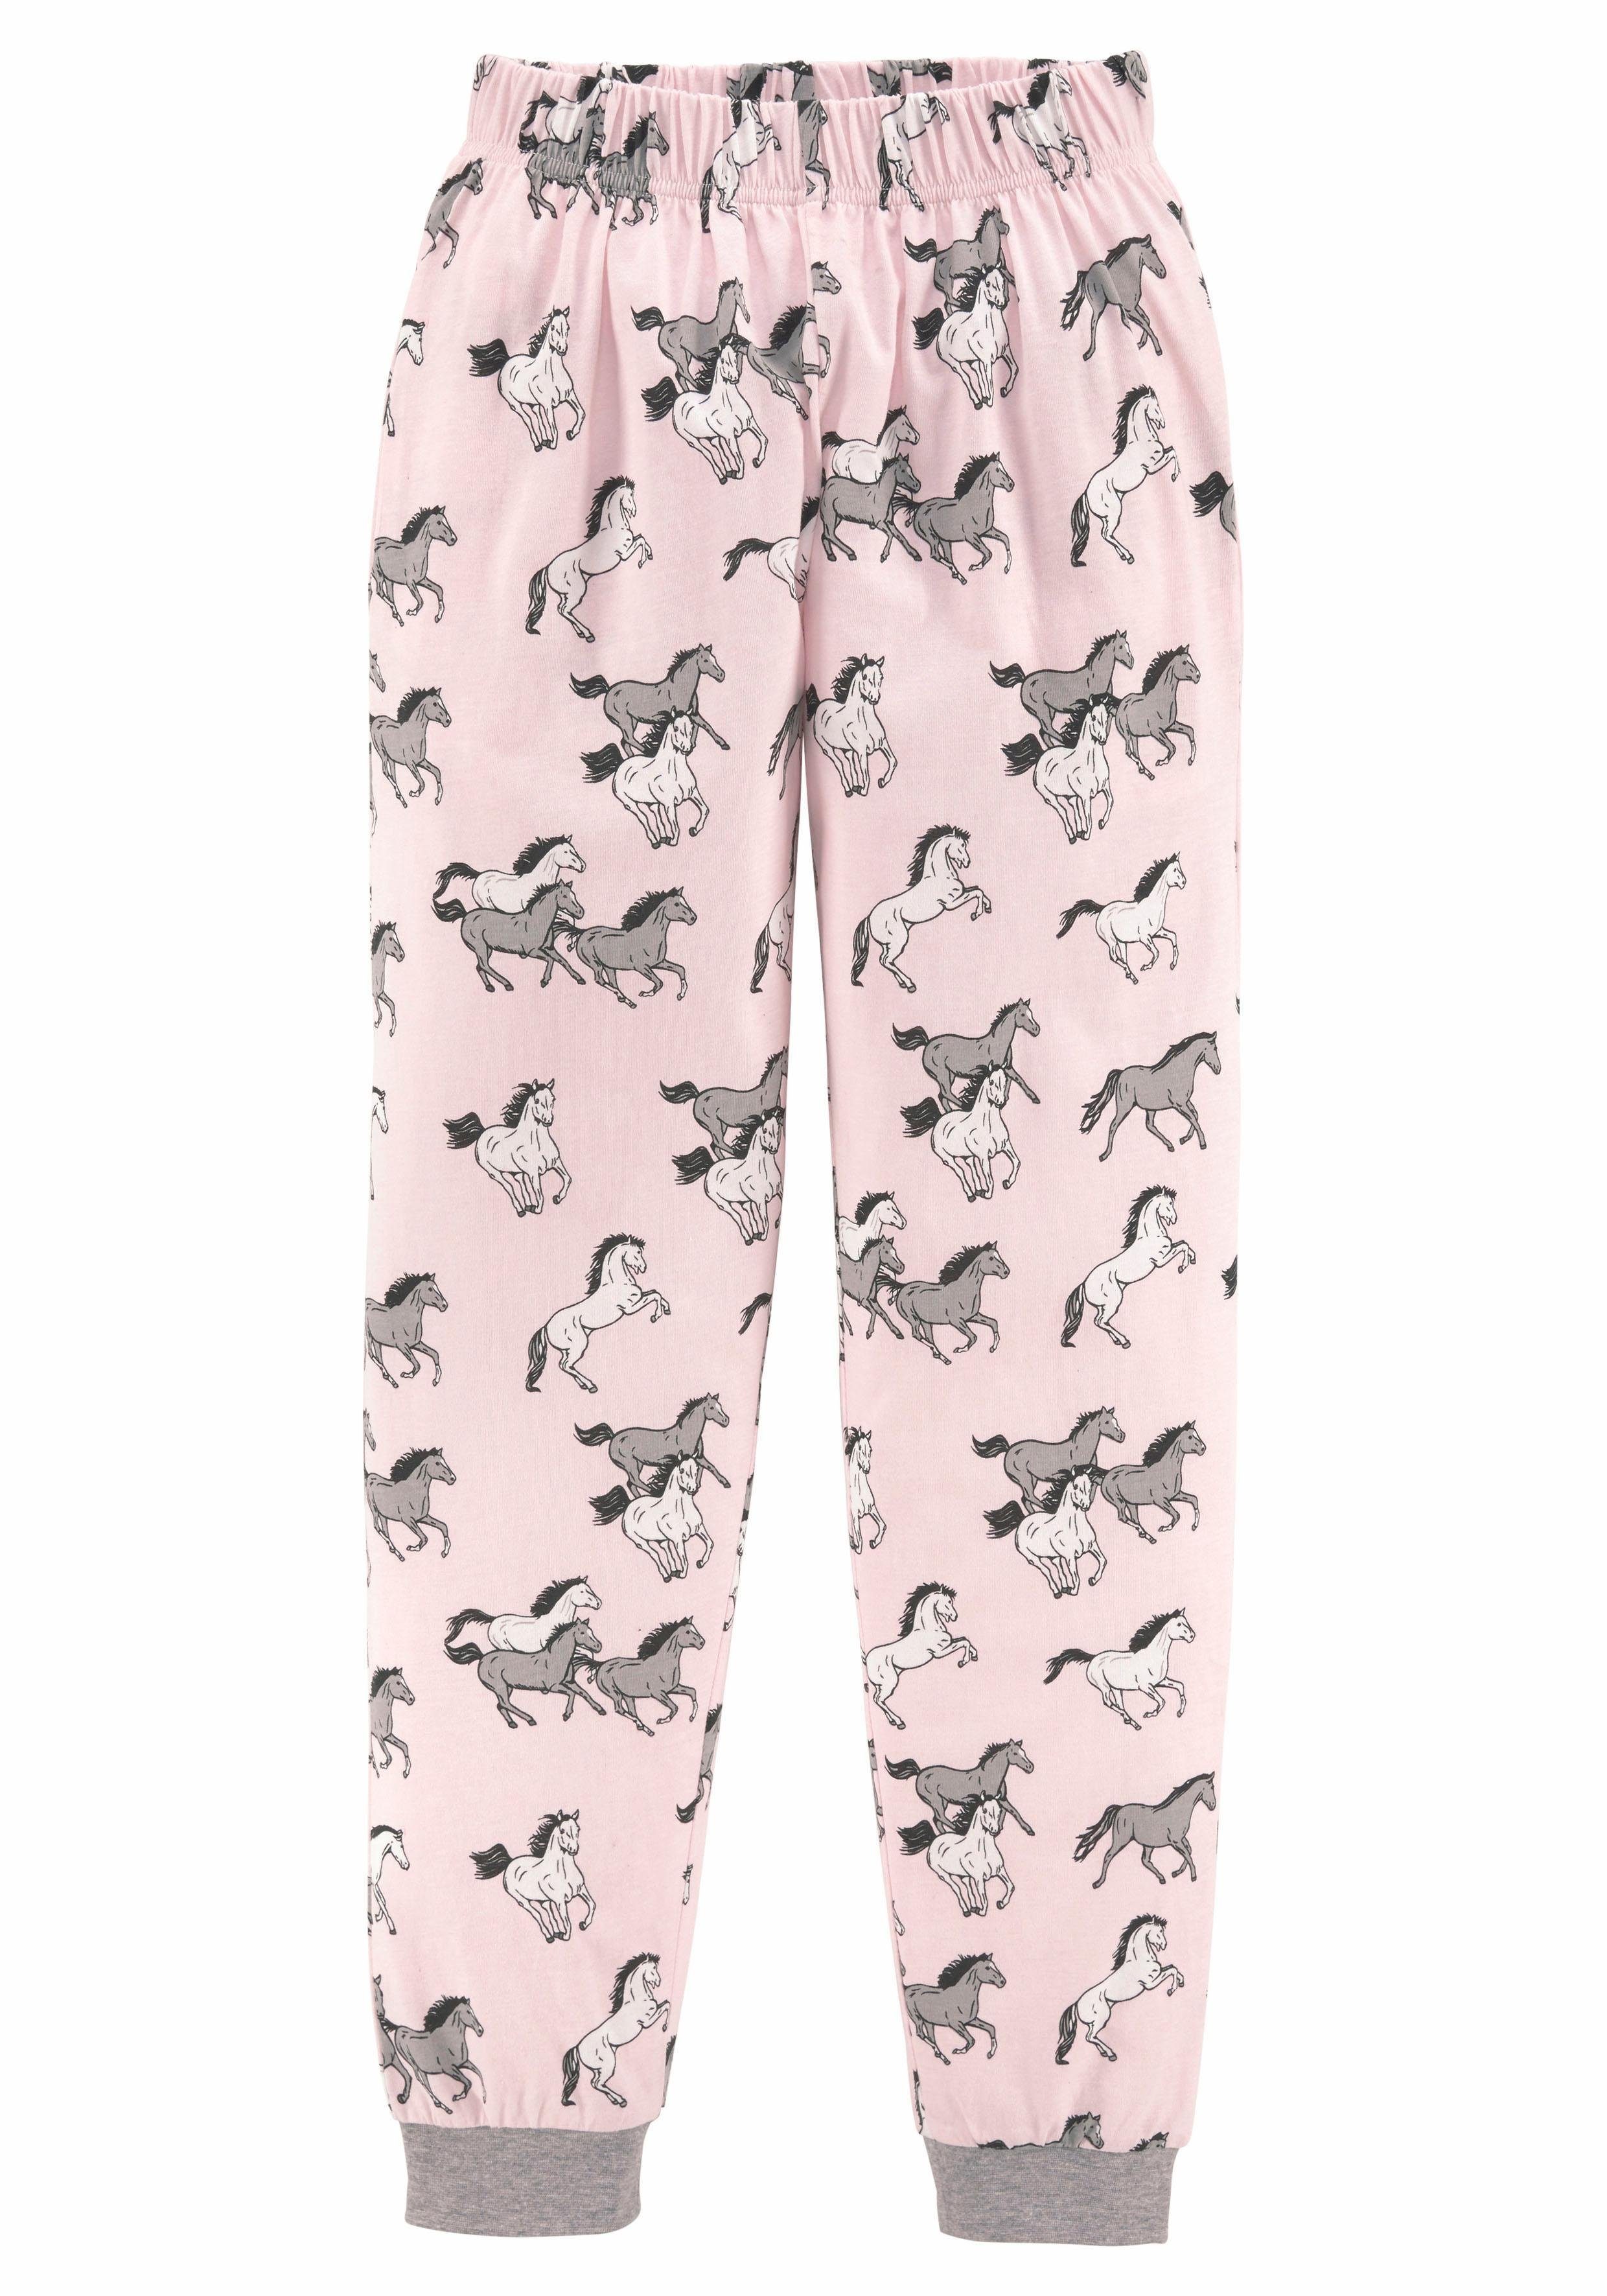 Stück) Pyjama tlg., fleur in petite Form langer 1 (2 Pferde mit Print